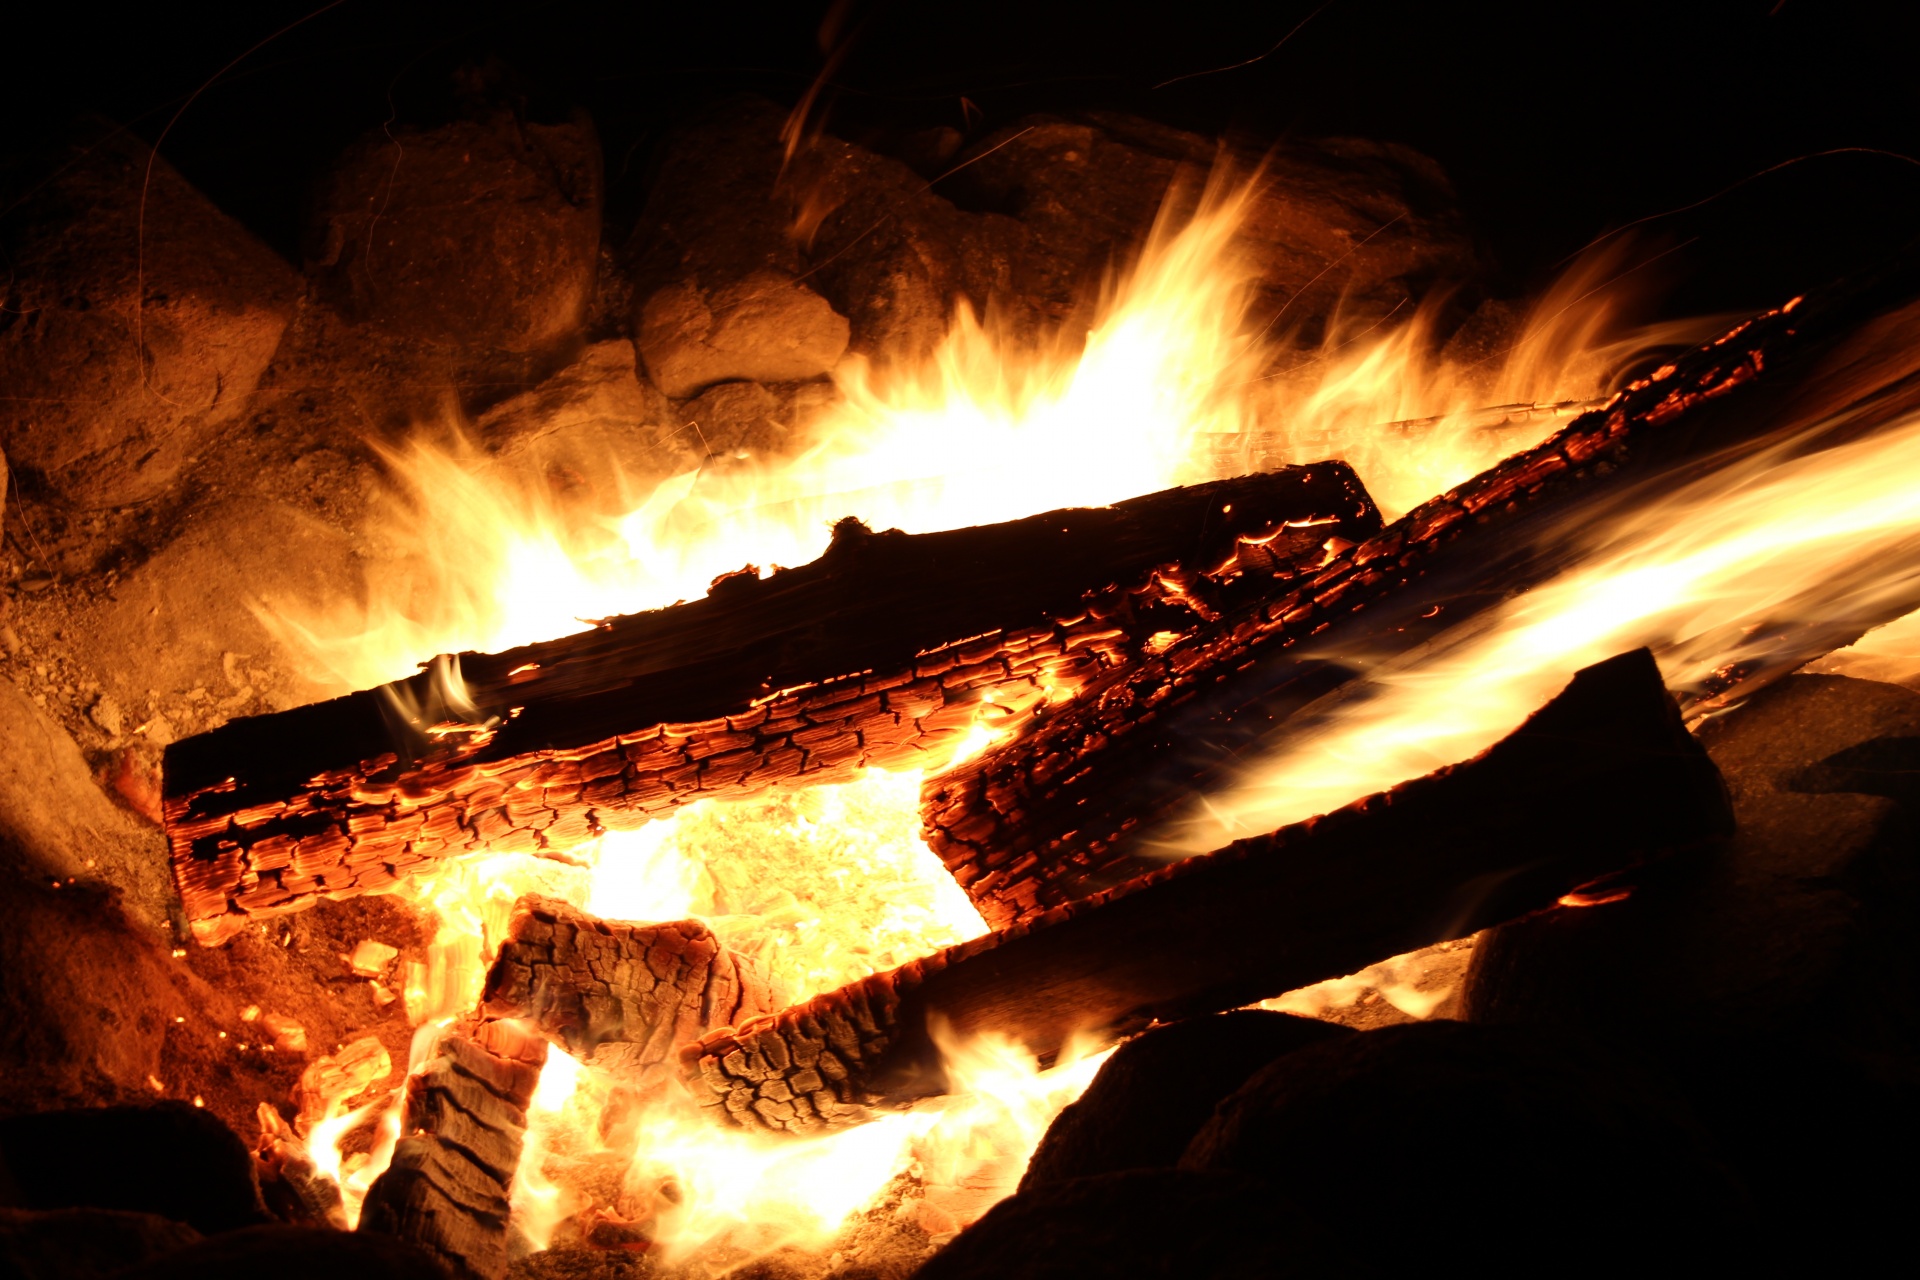 A Late Night Campfire